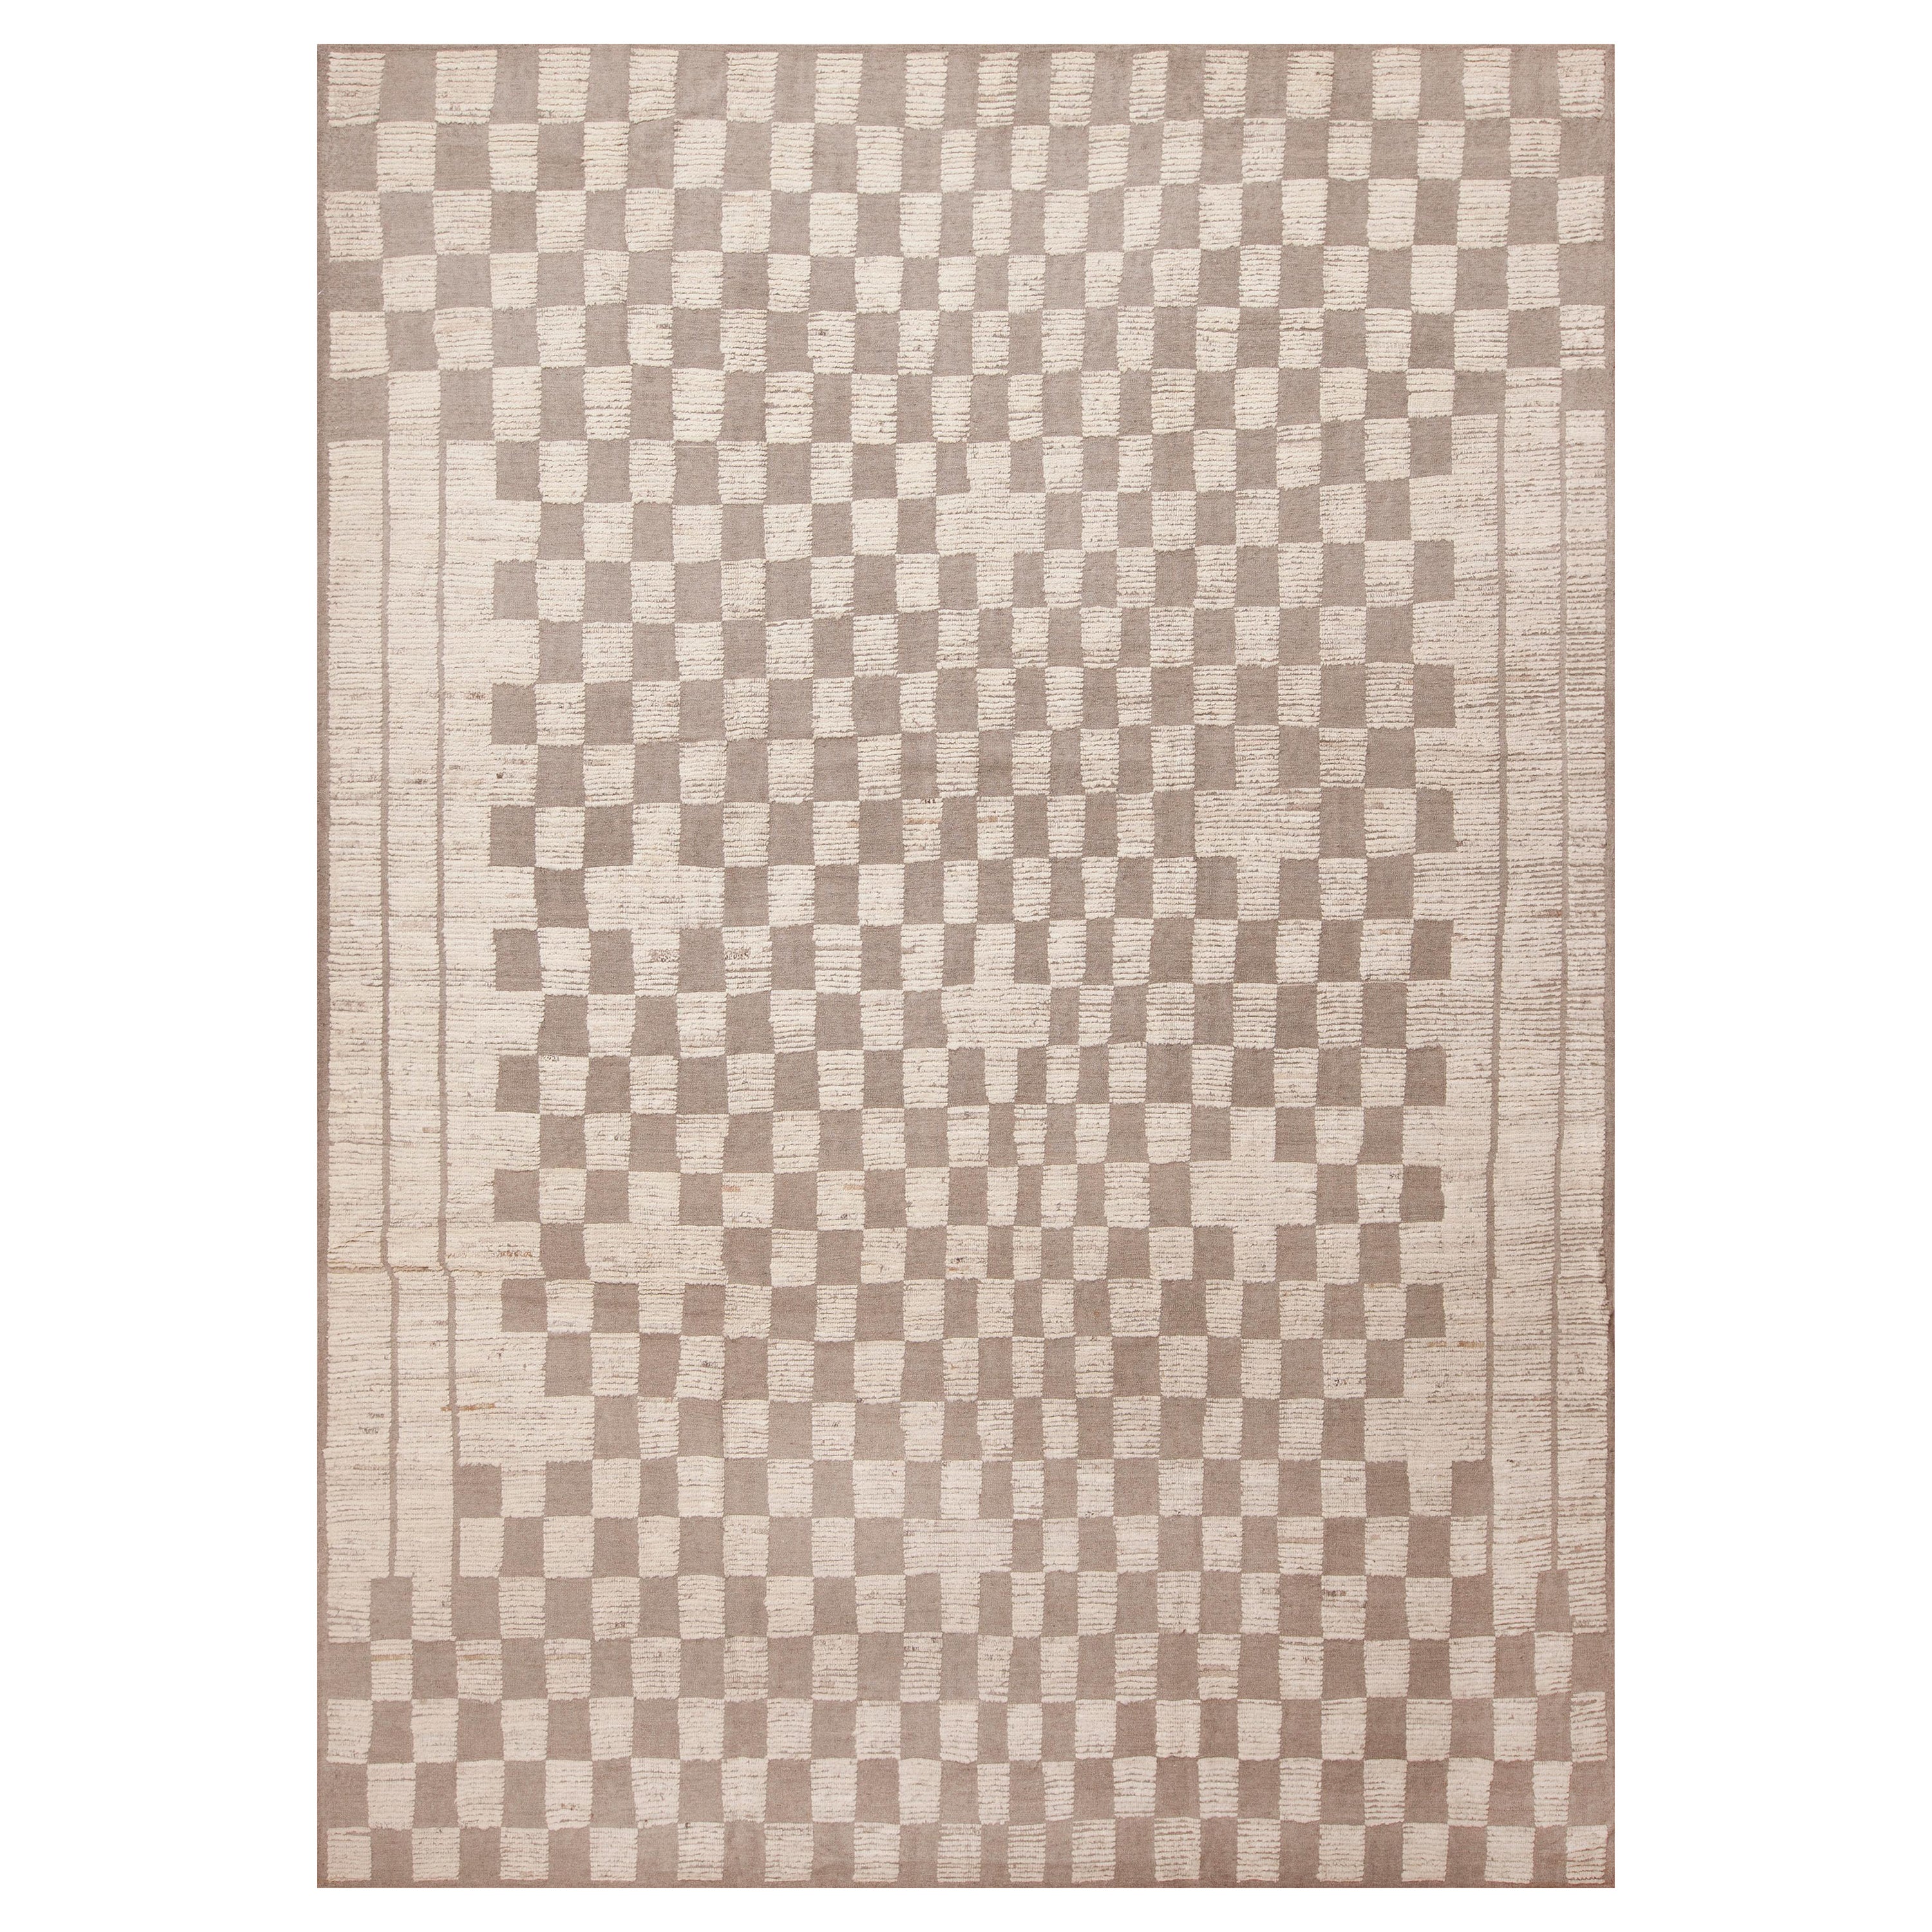 Nazmiyal Collection Neutral Tribal Checkboard Design Modern Rug 9'7" x 13'6" For Sale